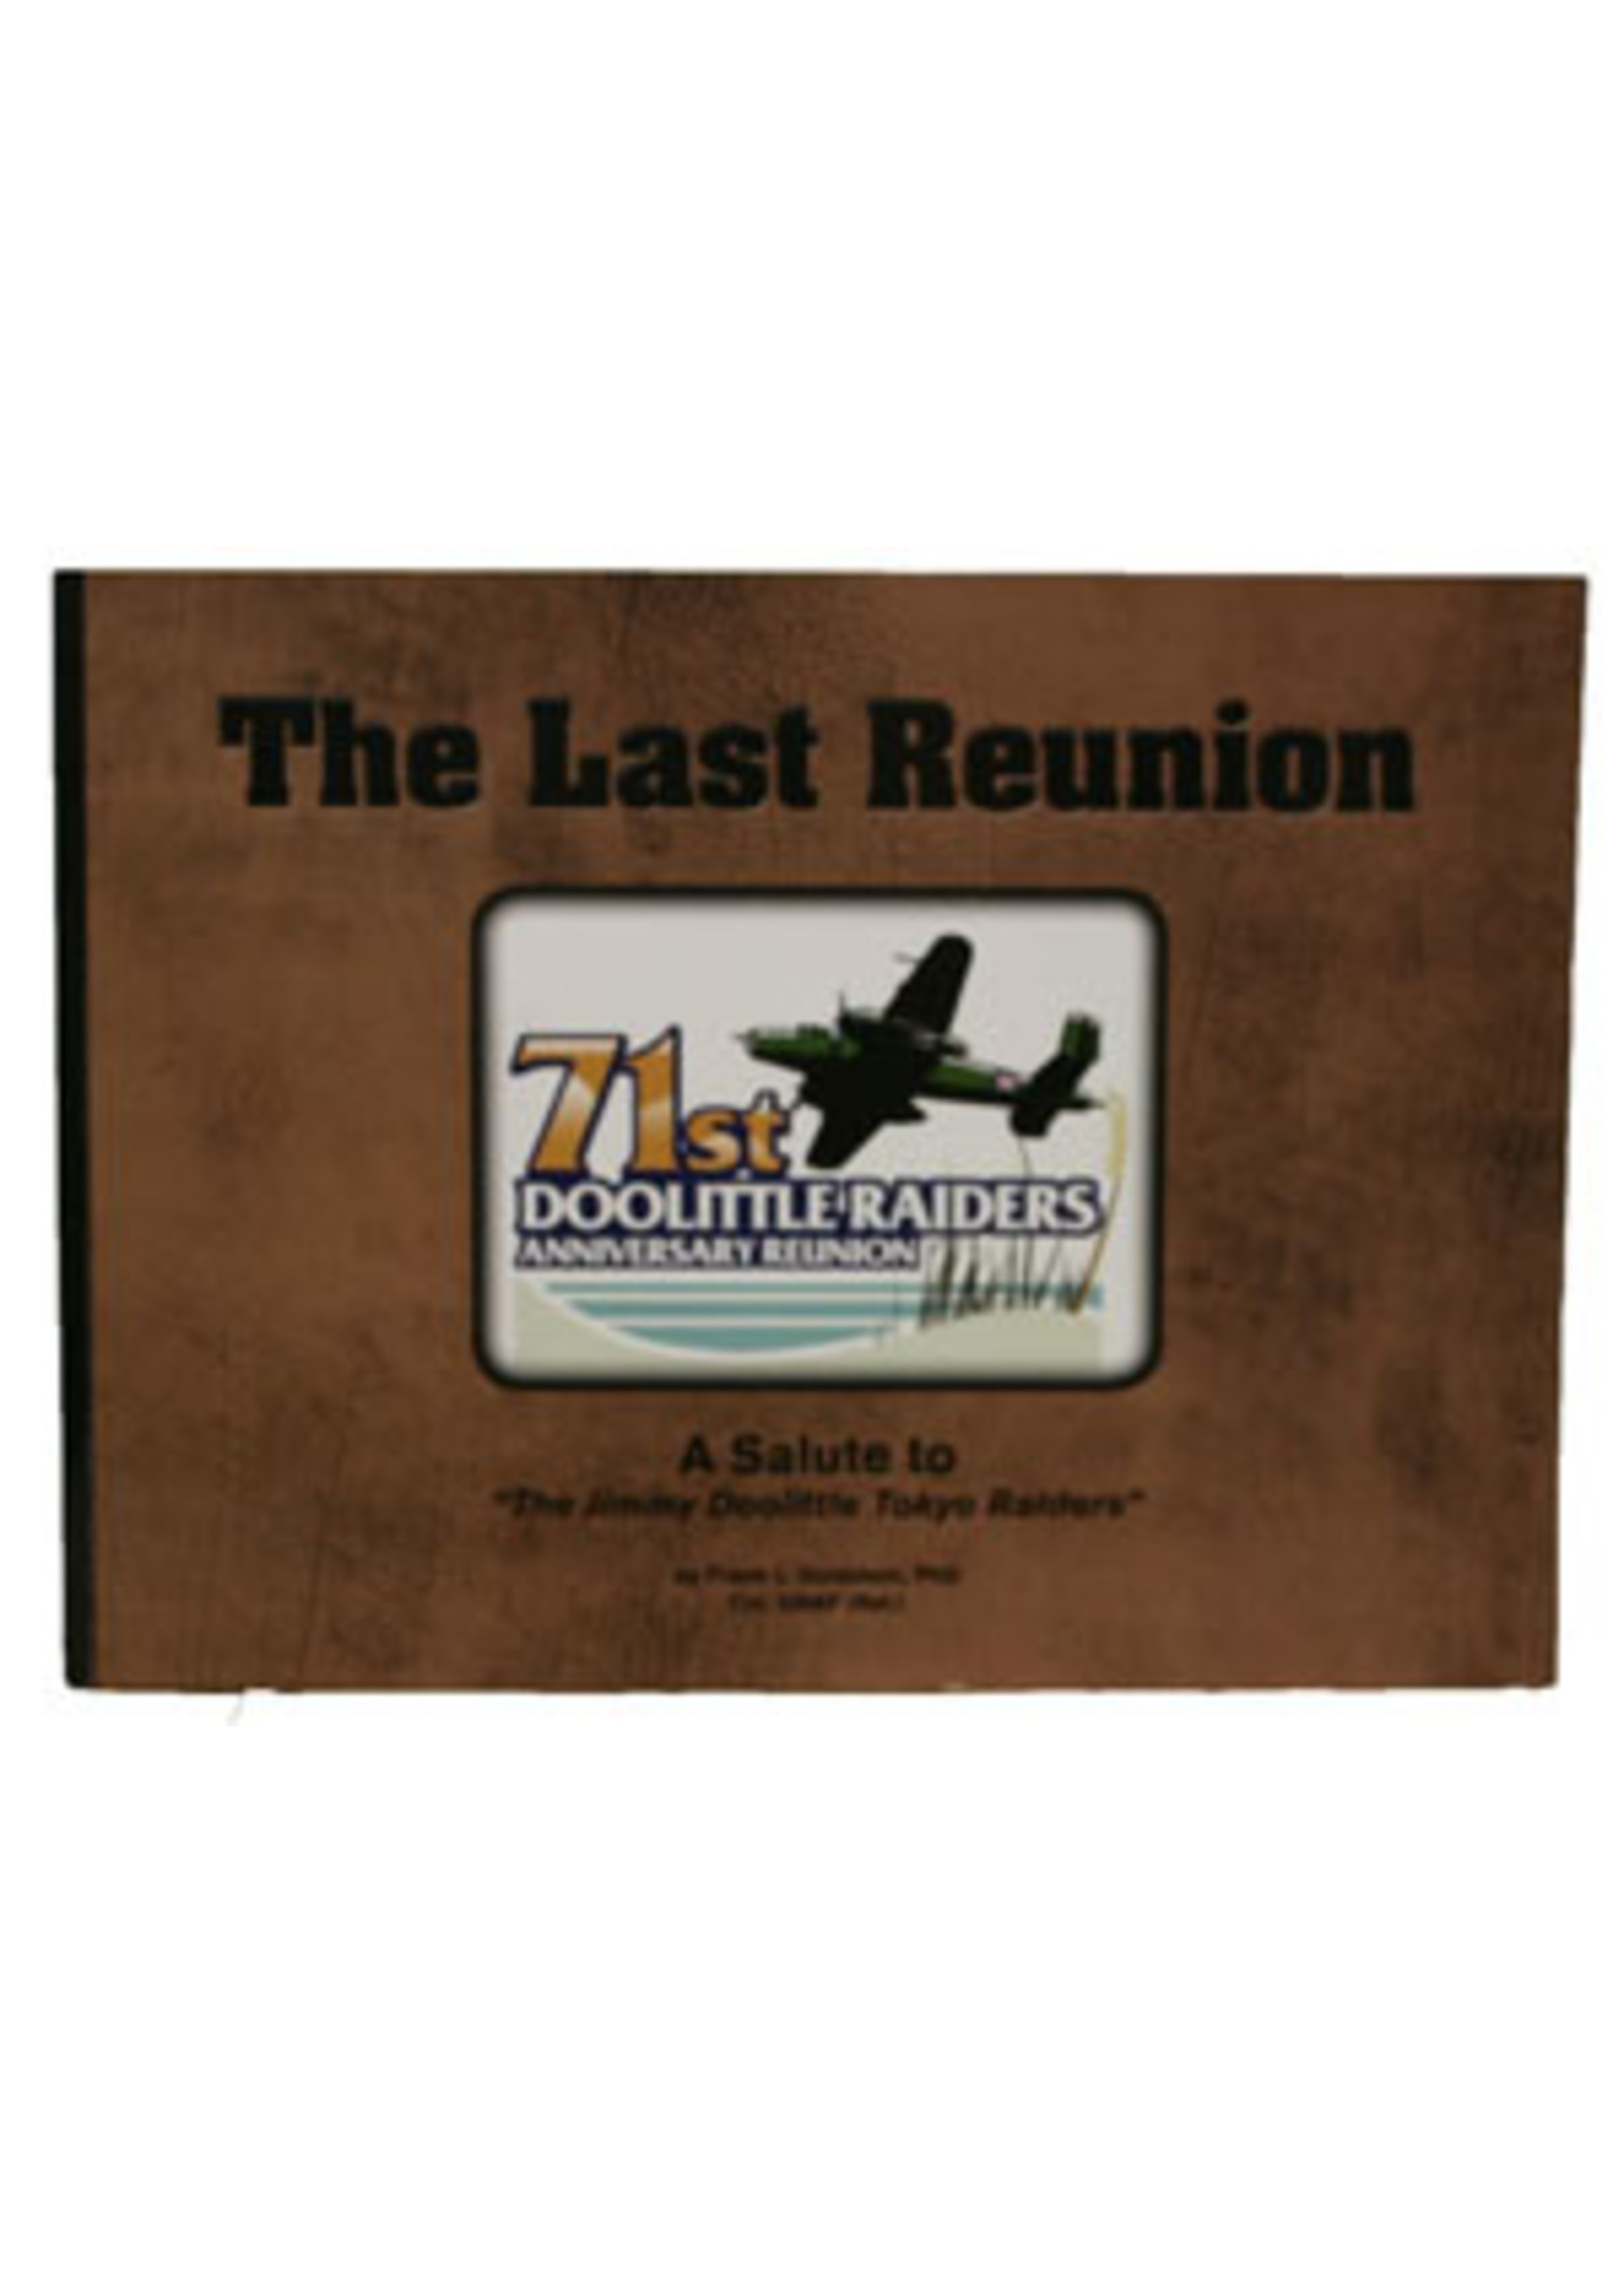 Book - The Last Reunion - 71st Doolittle Raiders Reunion